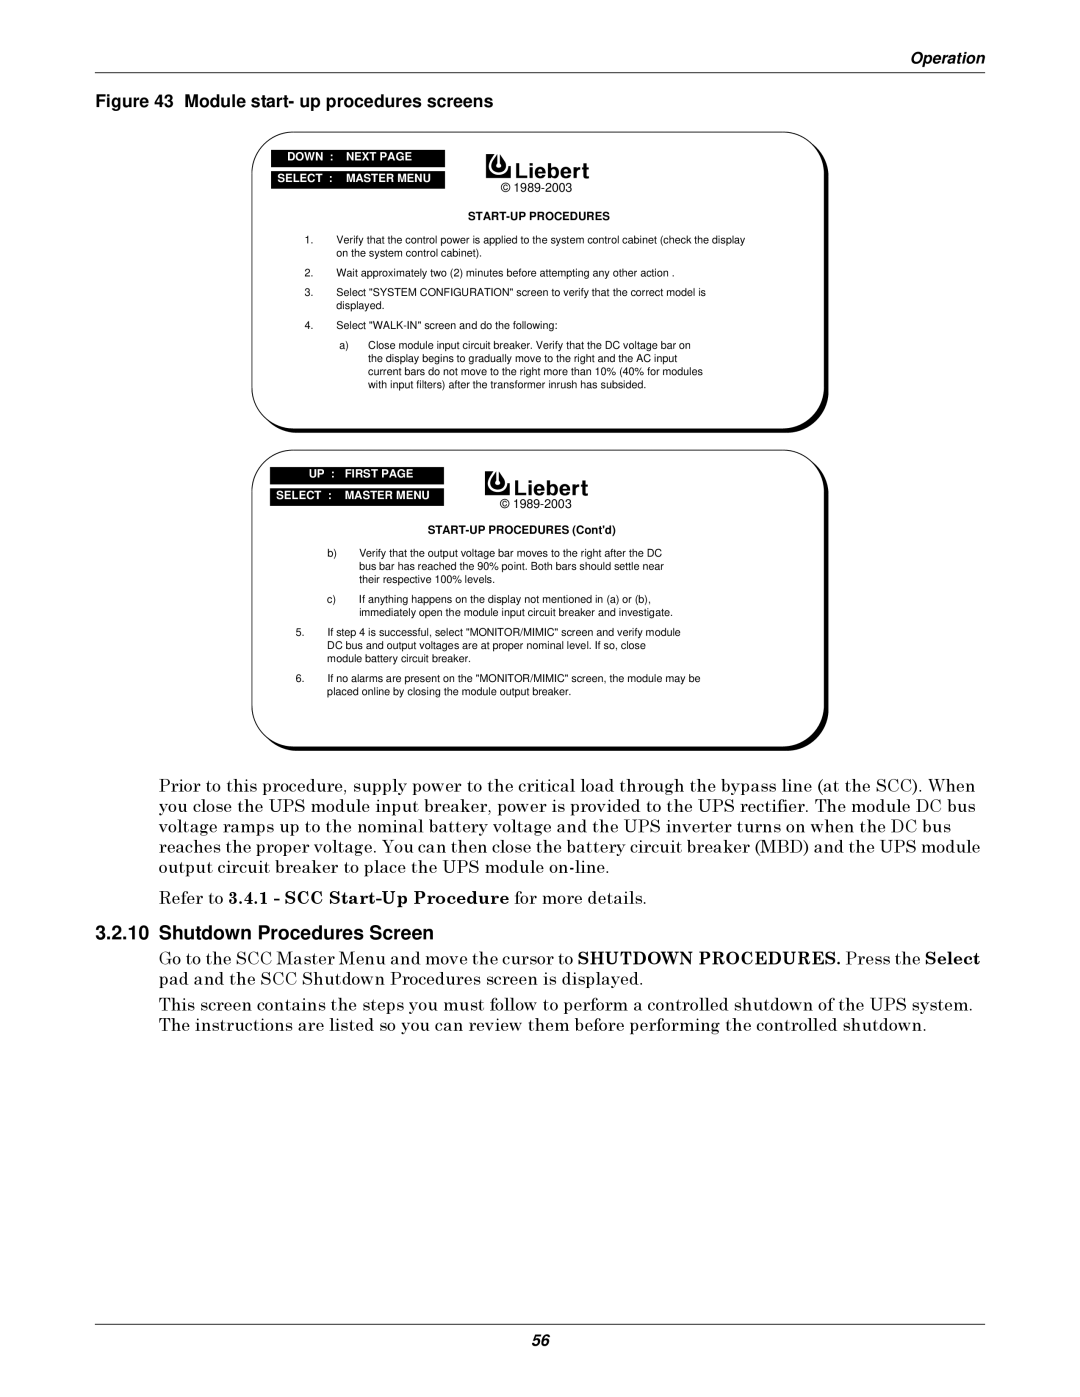 Emerson Series 610 manual Shutdown Procedures Screen, Module start- up procedures screens 